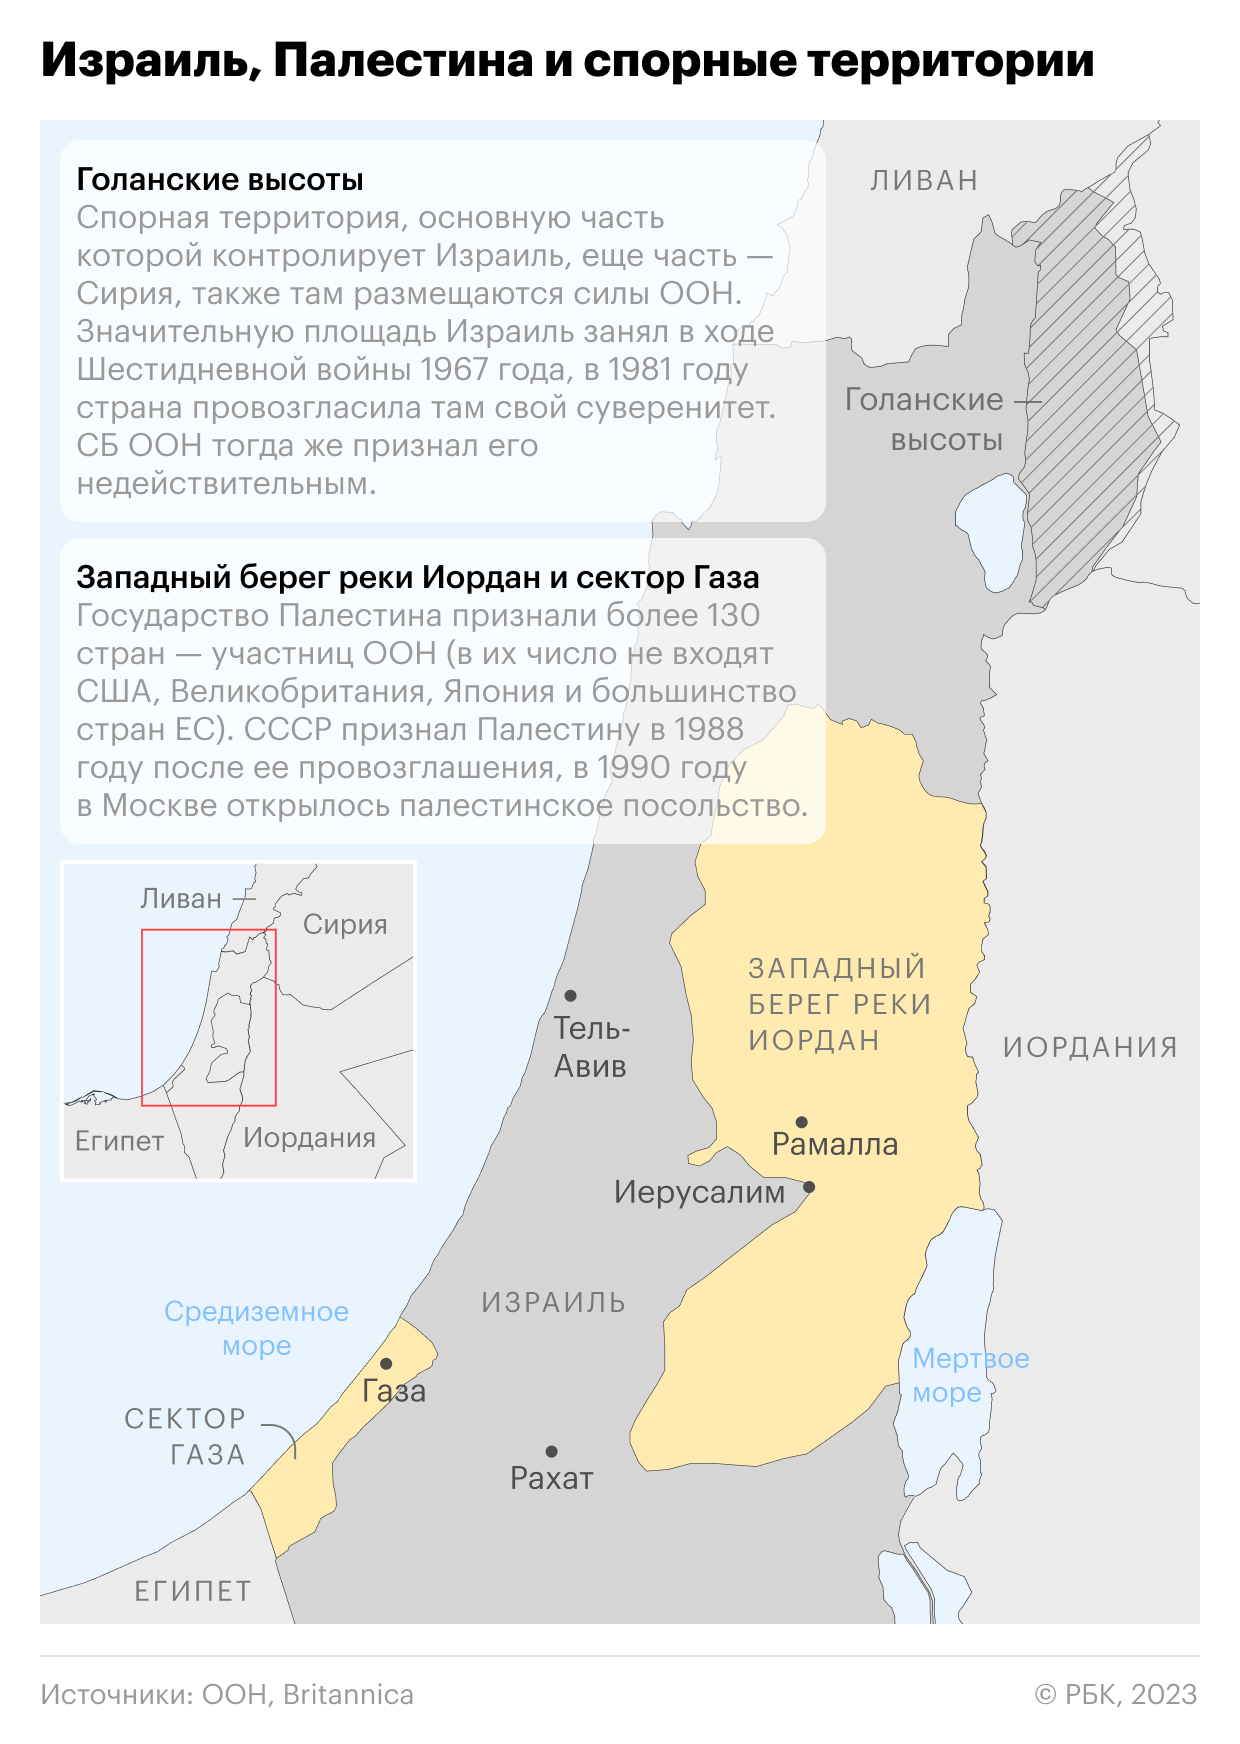 Нетаньяху заявил о ликвидации командиров половины батальонов ХАМАС